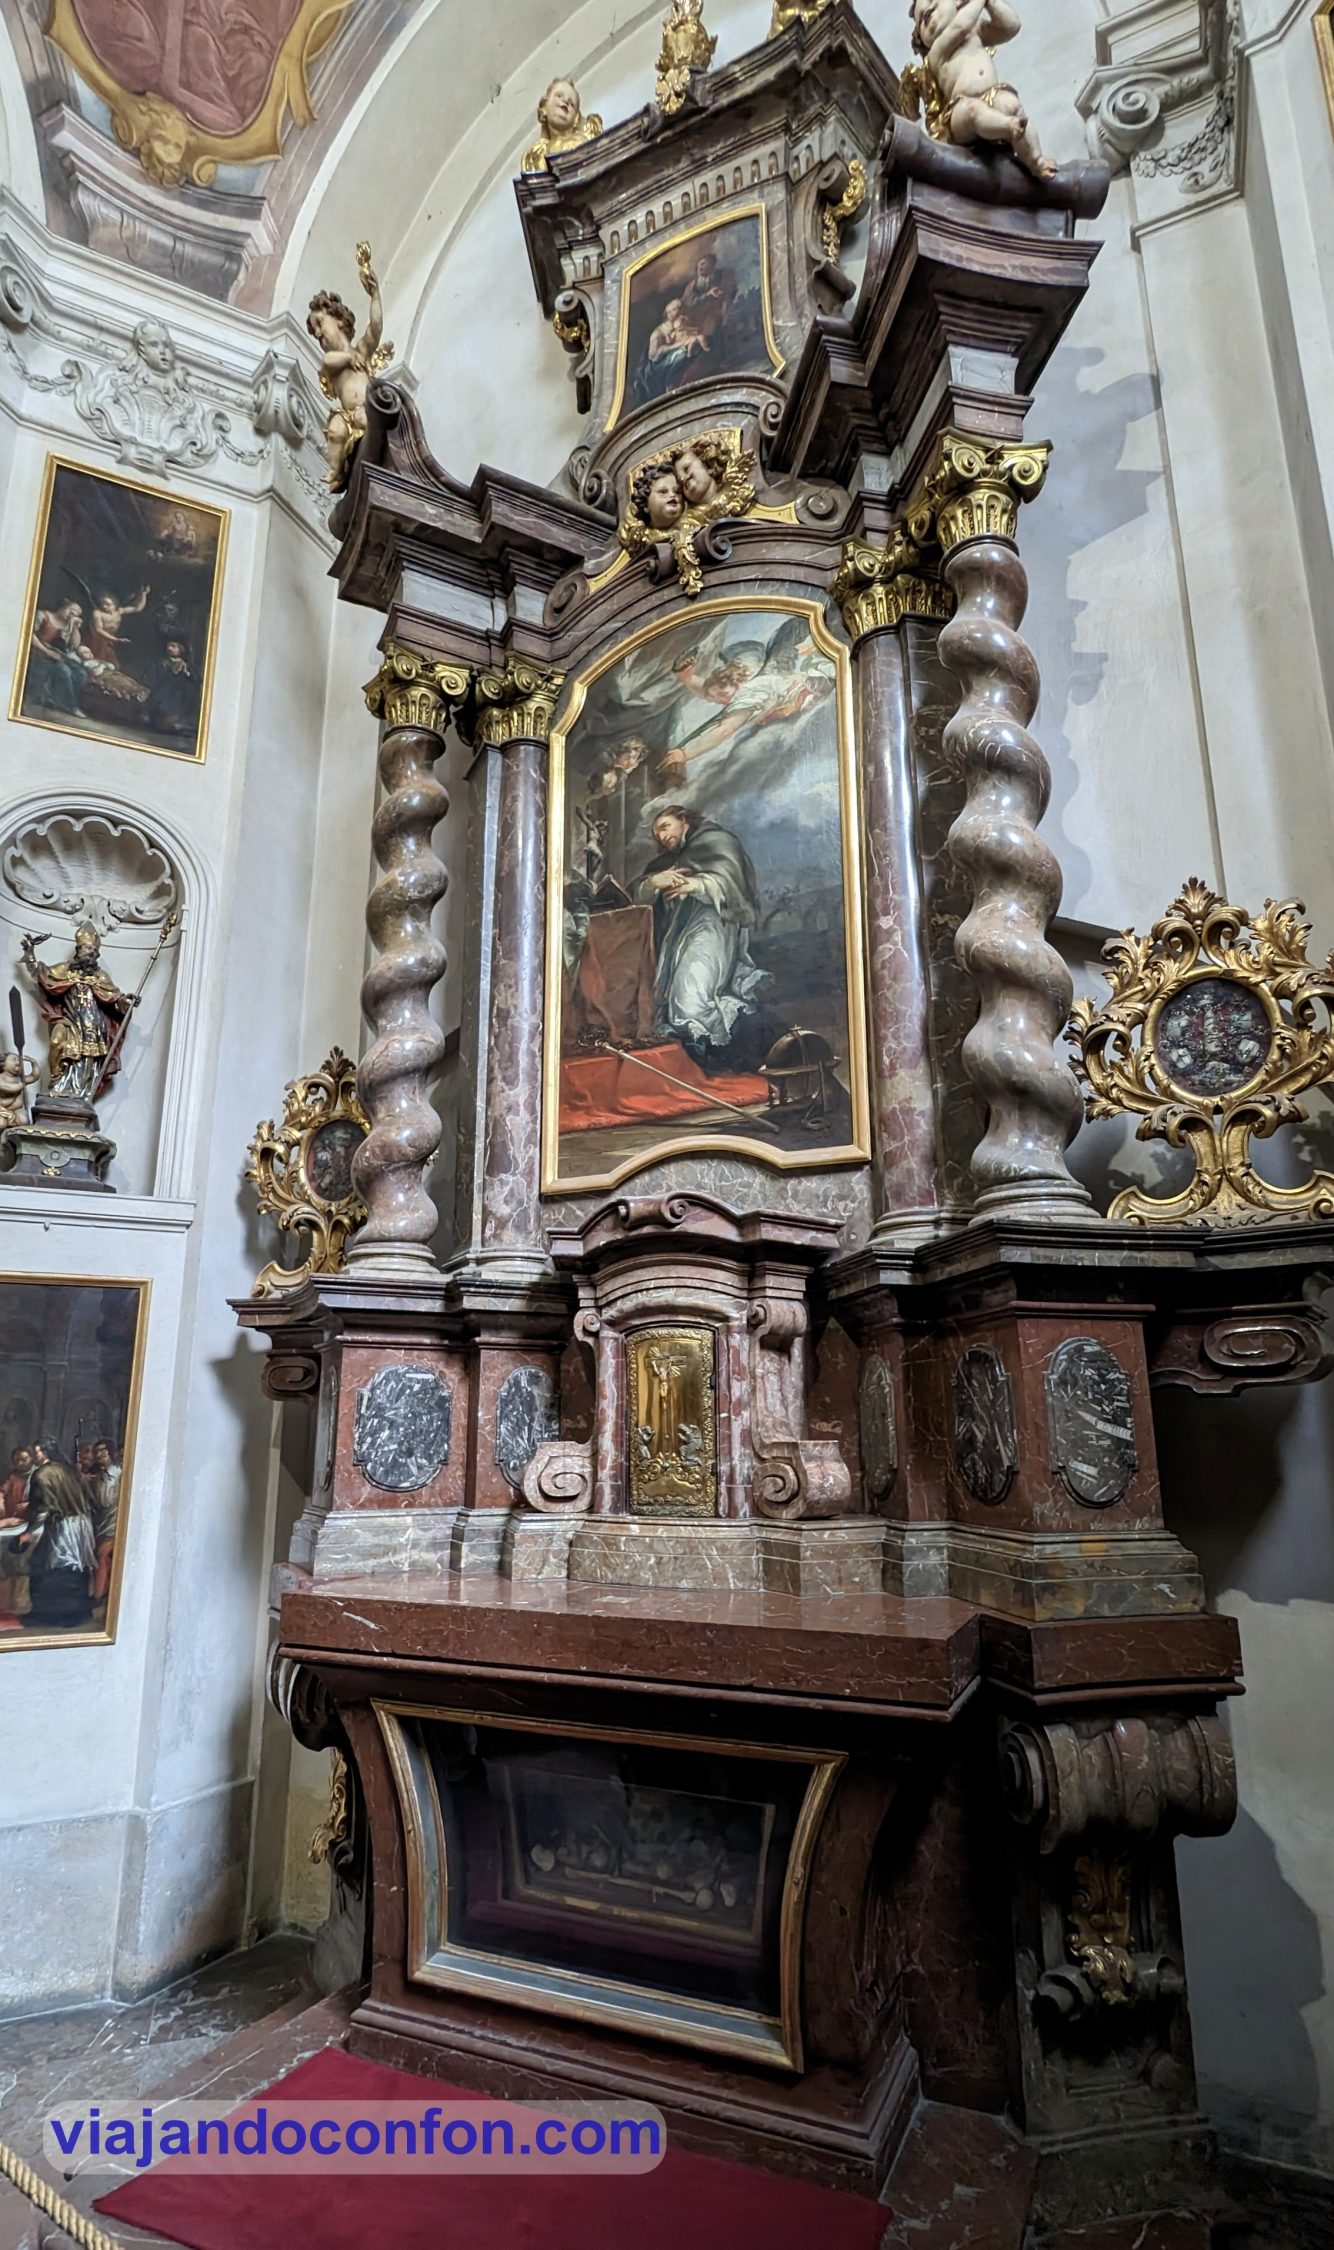 Bazilika svatého Jiří, Basílica de San Jorge
Praga / Prague